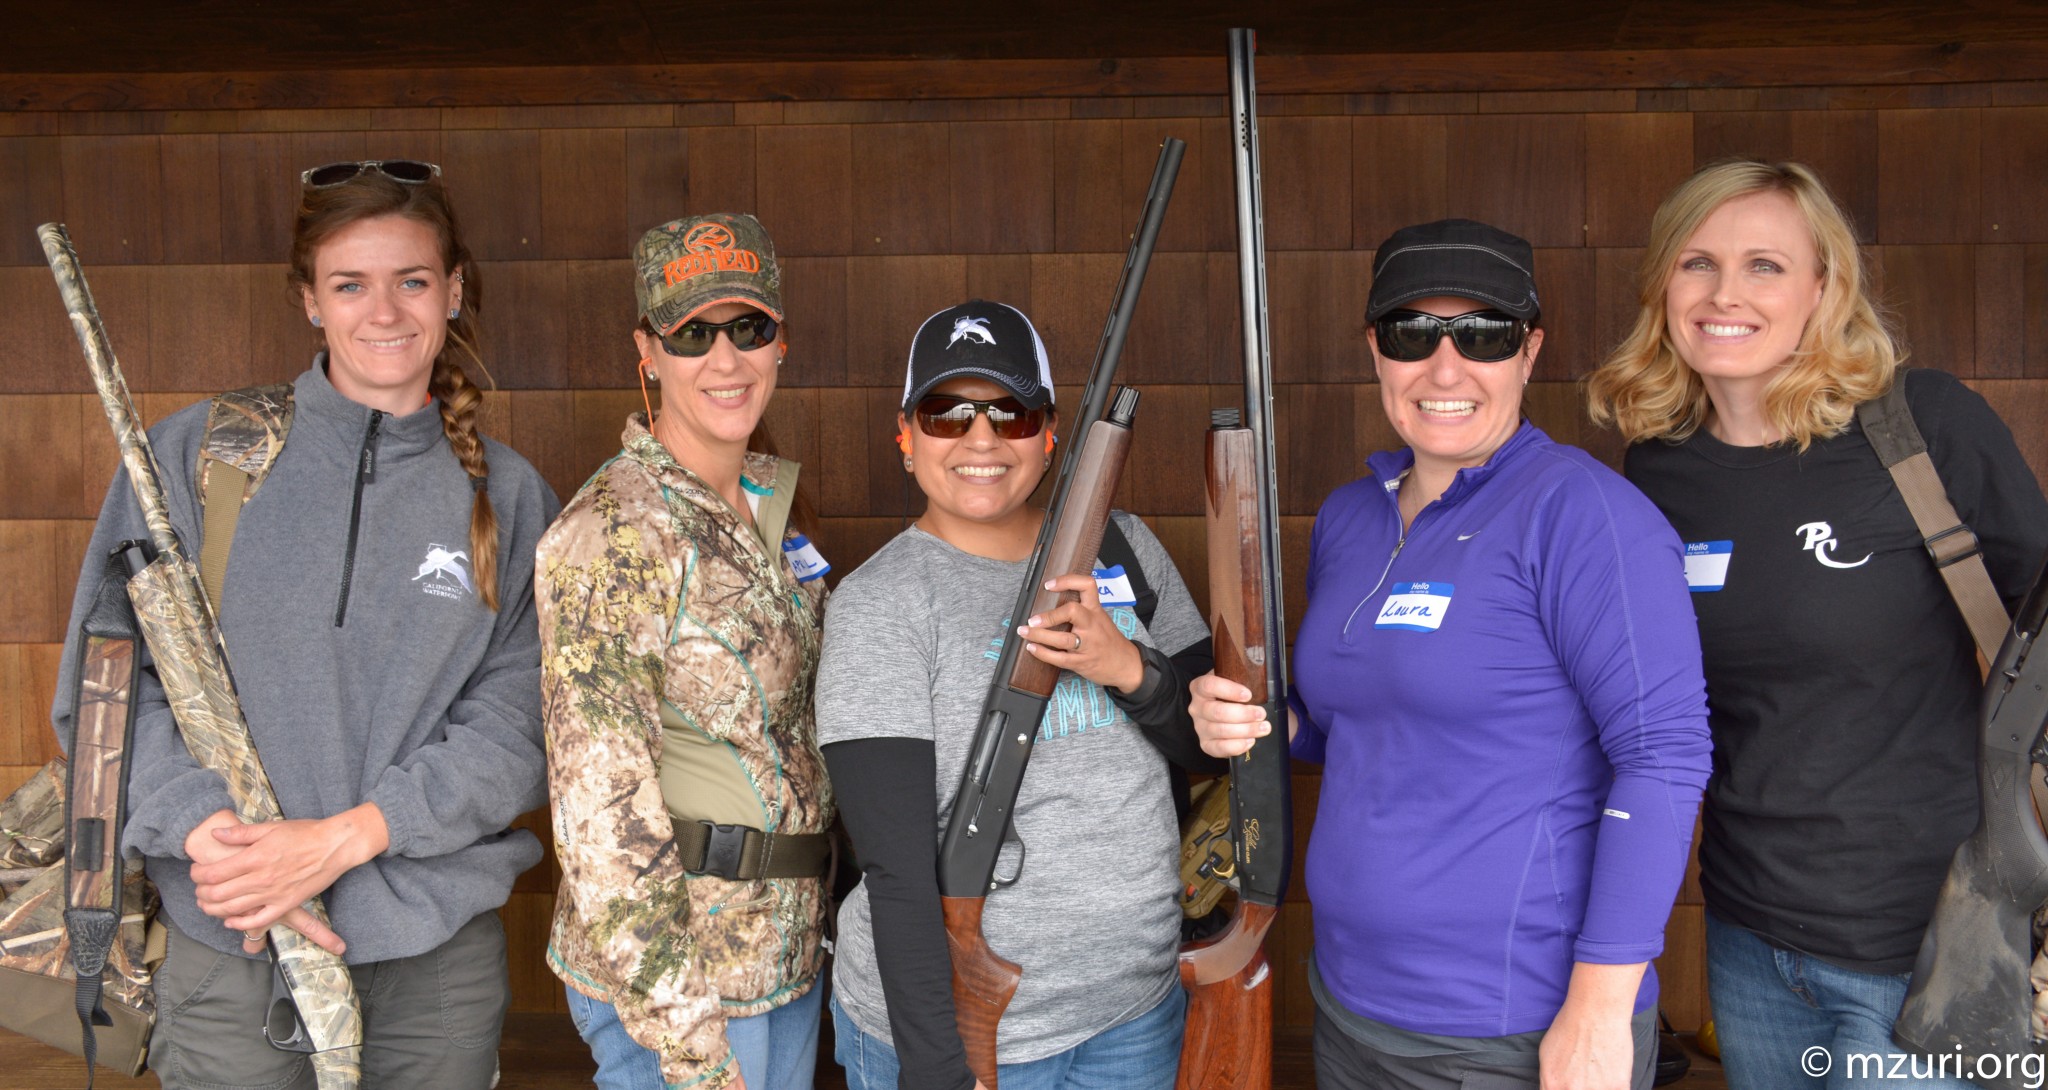 learning shotgun sports at CWA Becoming An Outdoors Woman Program